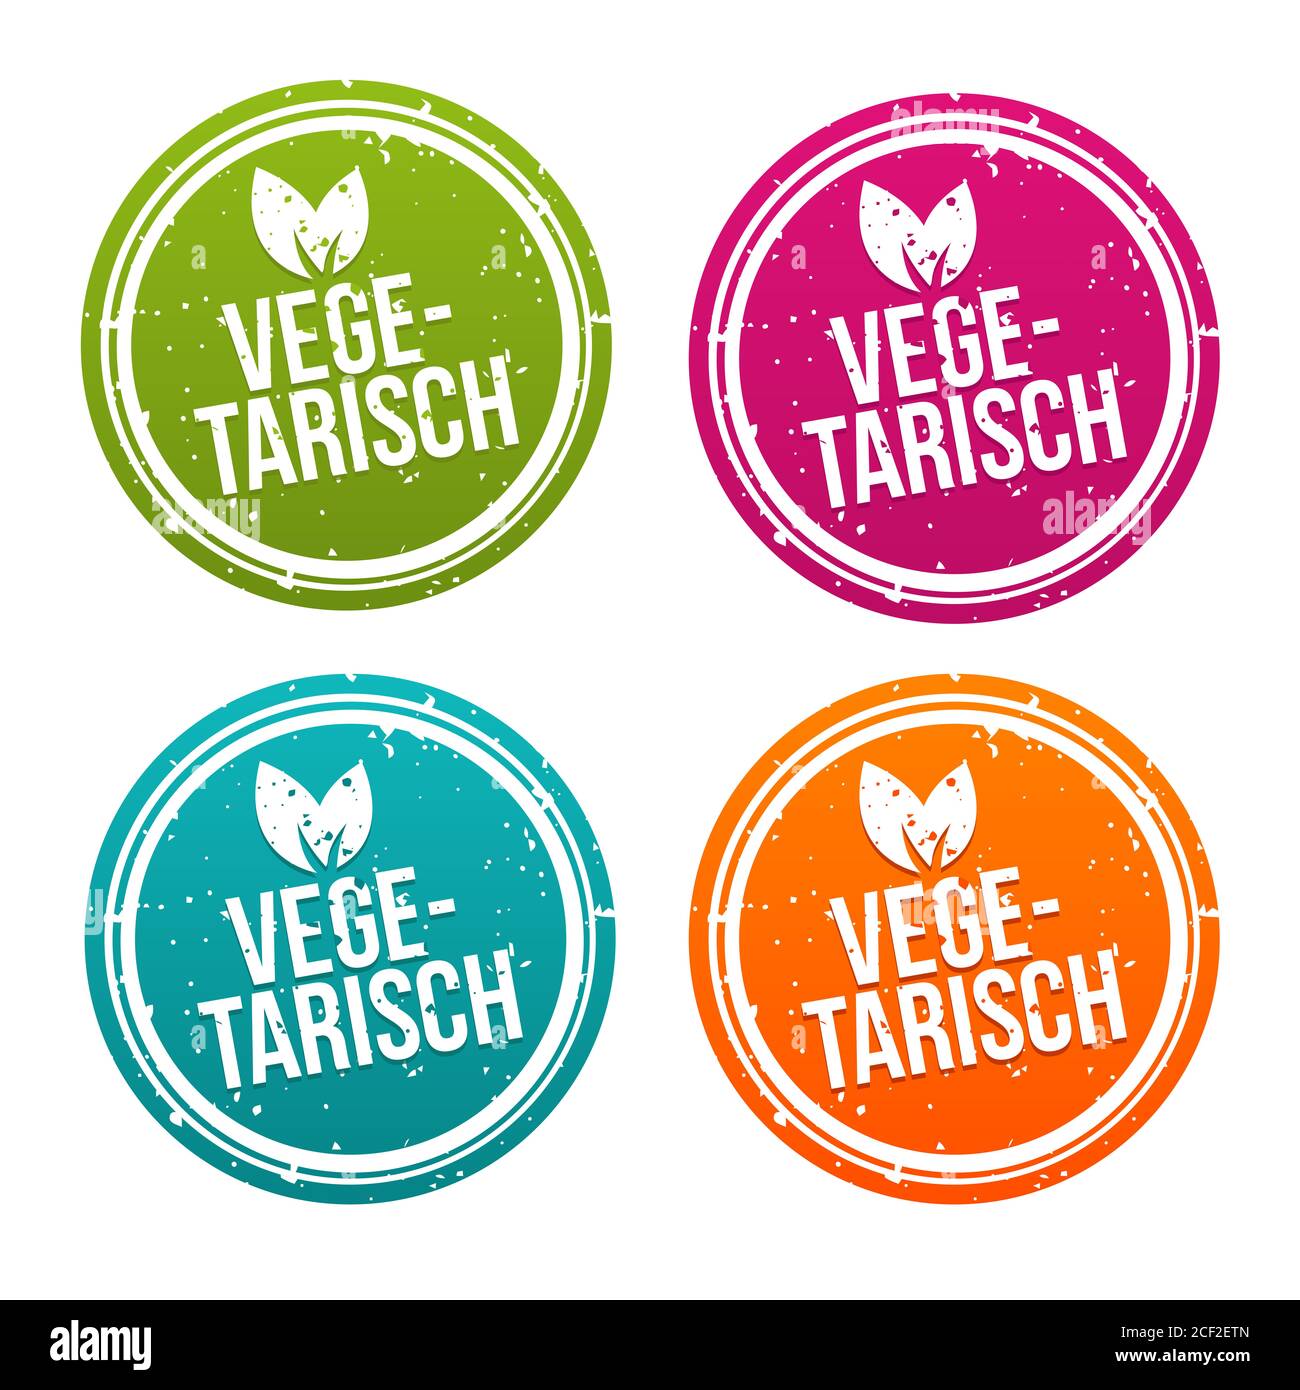 Bouton Vegetarisch défini dans verschiedenen Farben. Banque D'Images